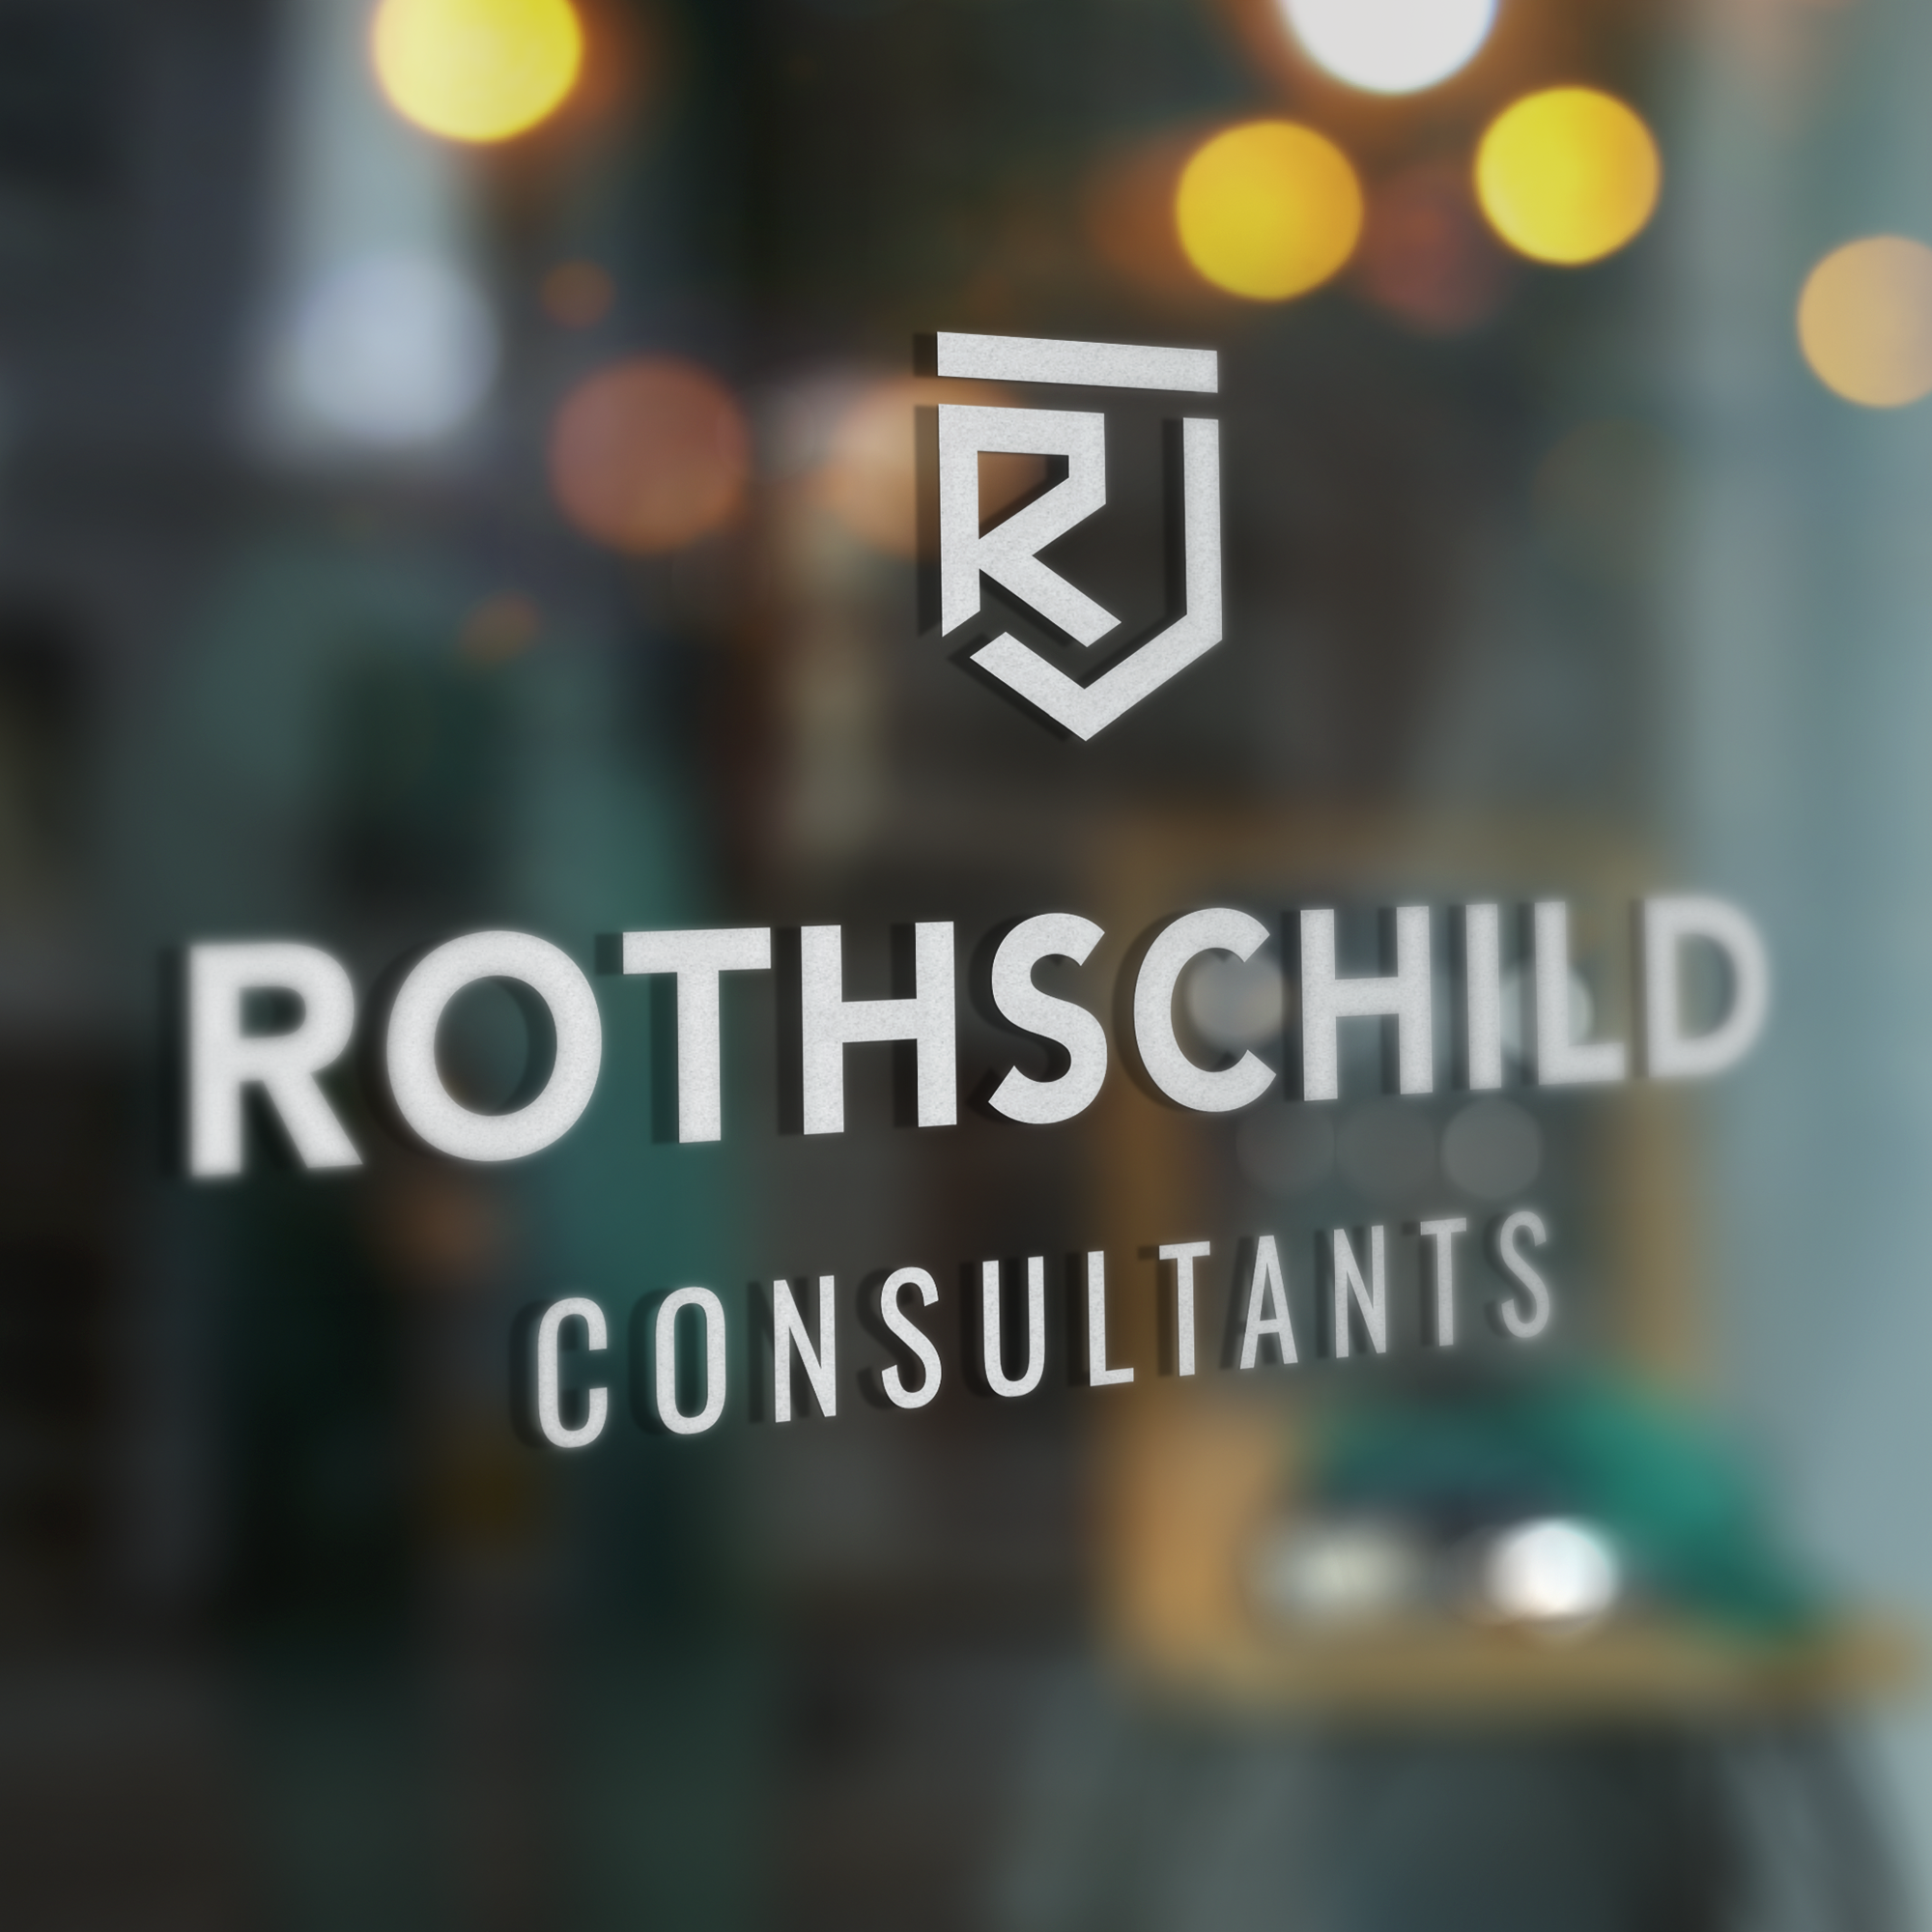 Rothschild Consultants